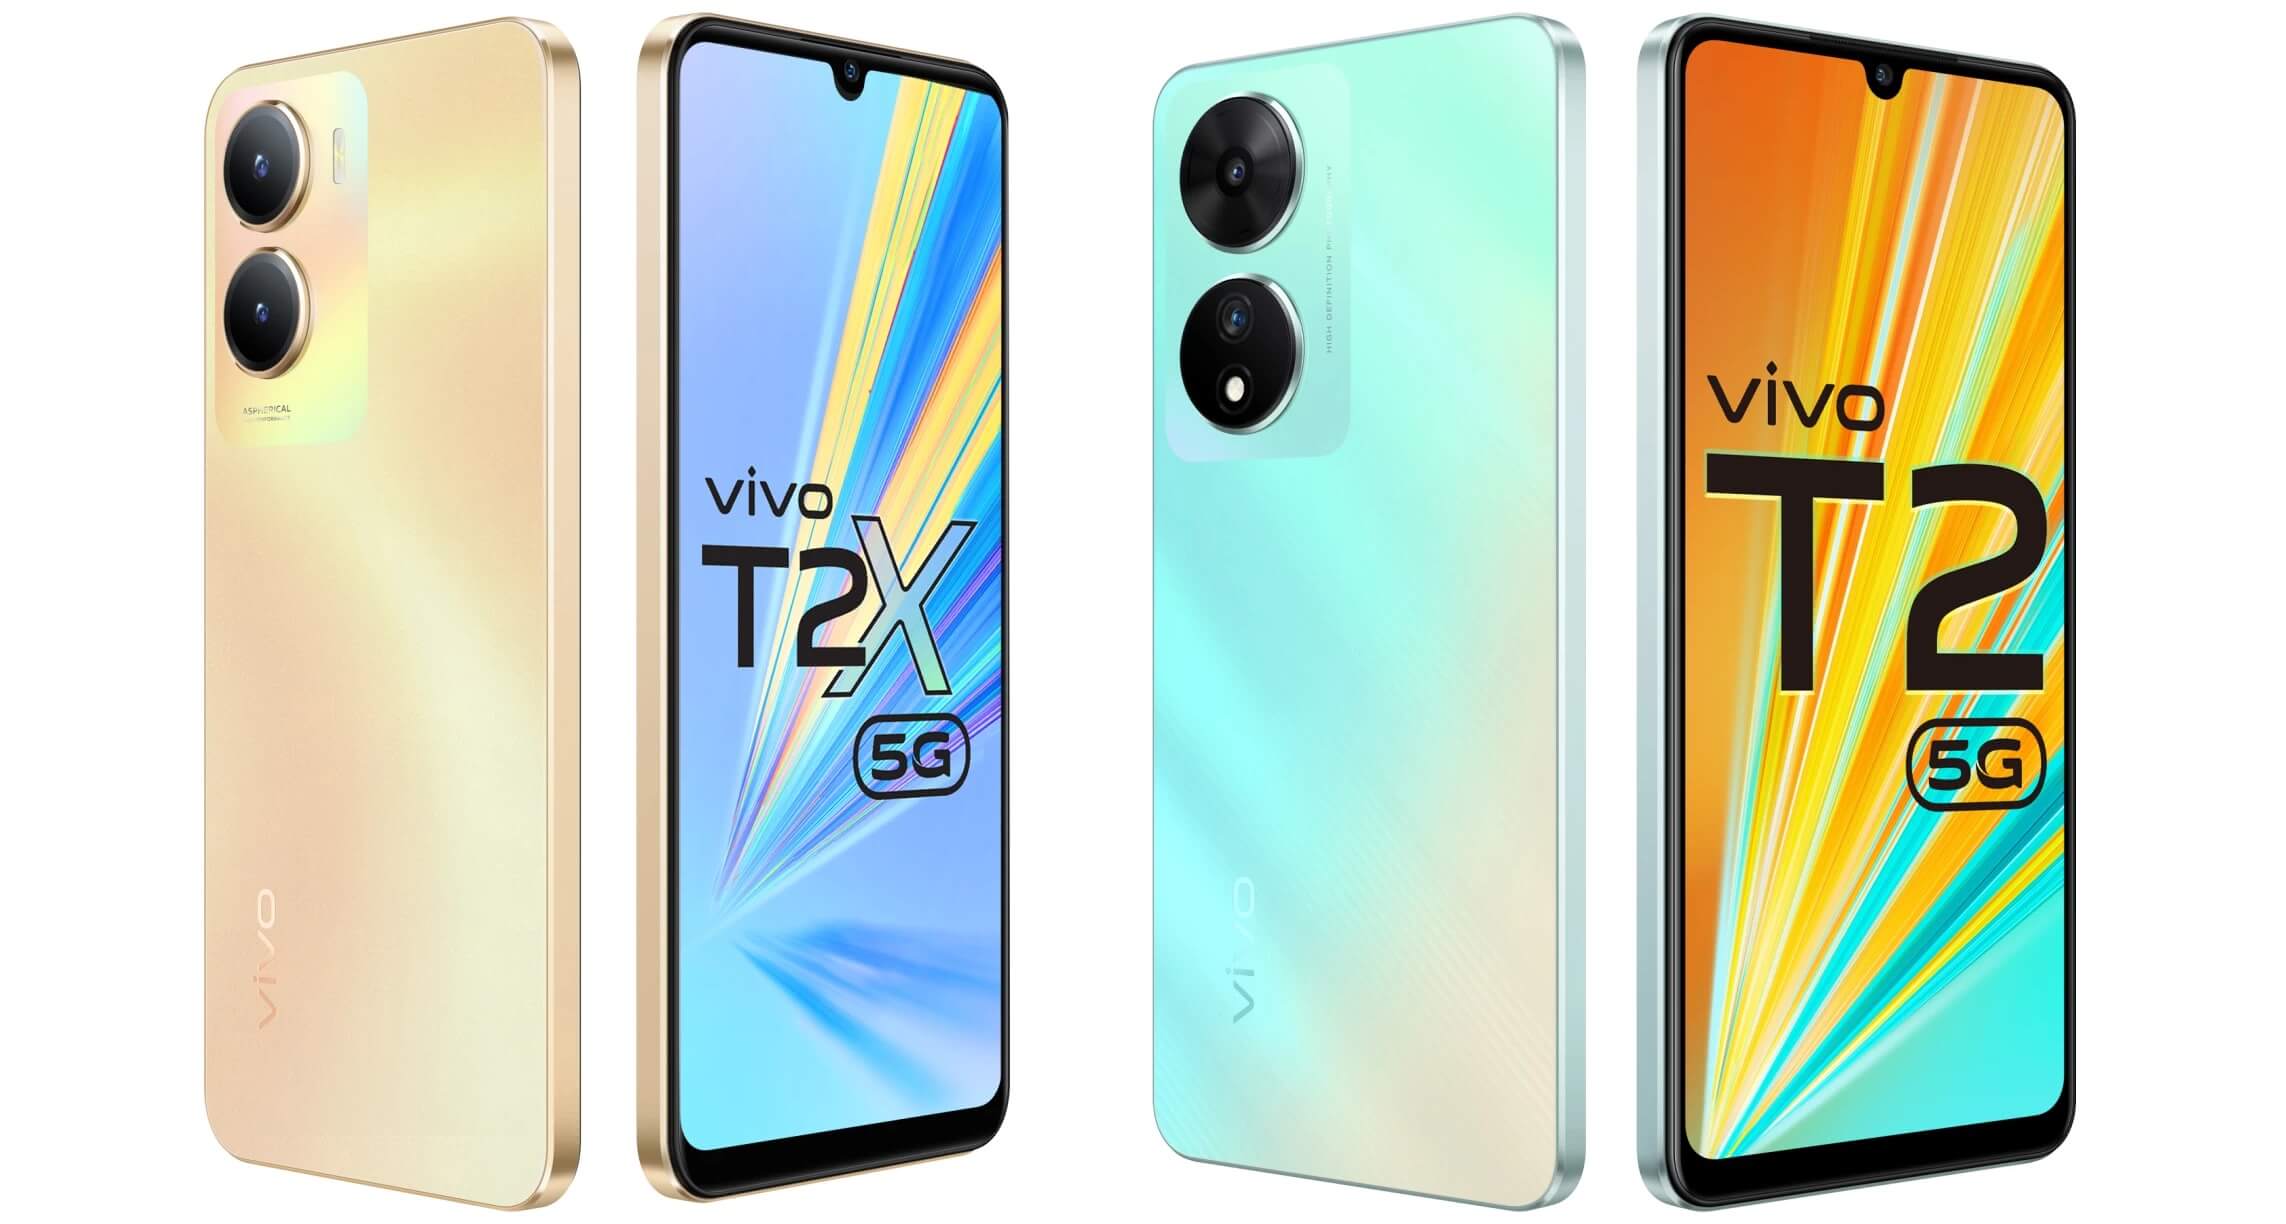 VIvo T2x 5G and VIvo T2 5G launch India